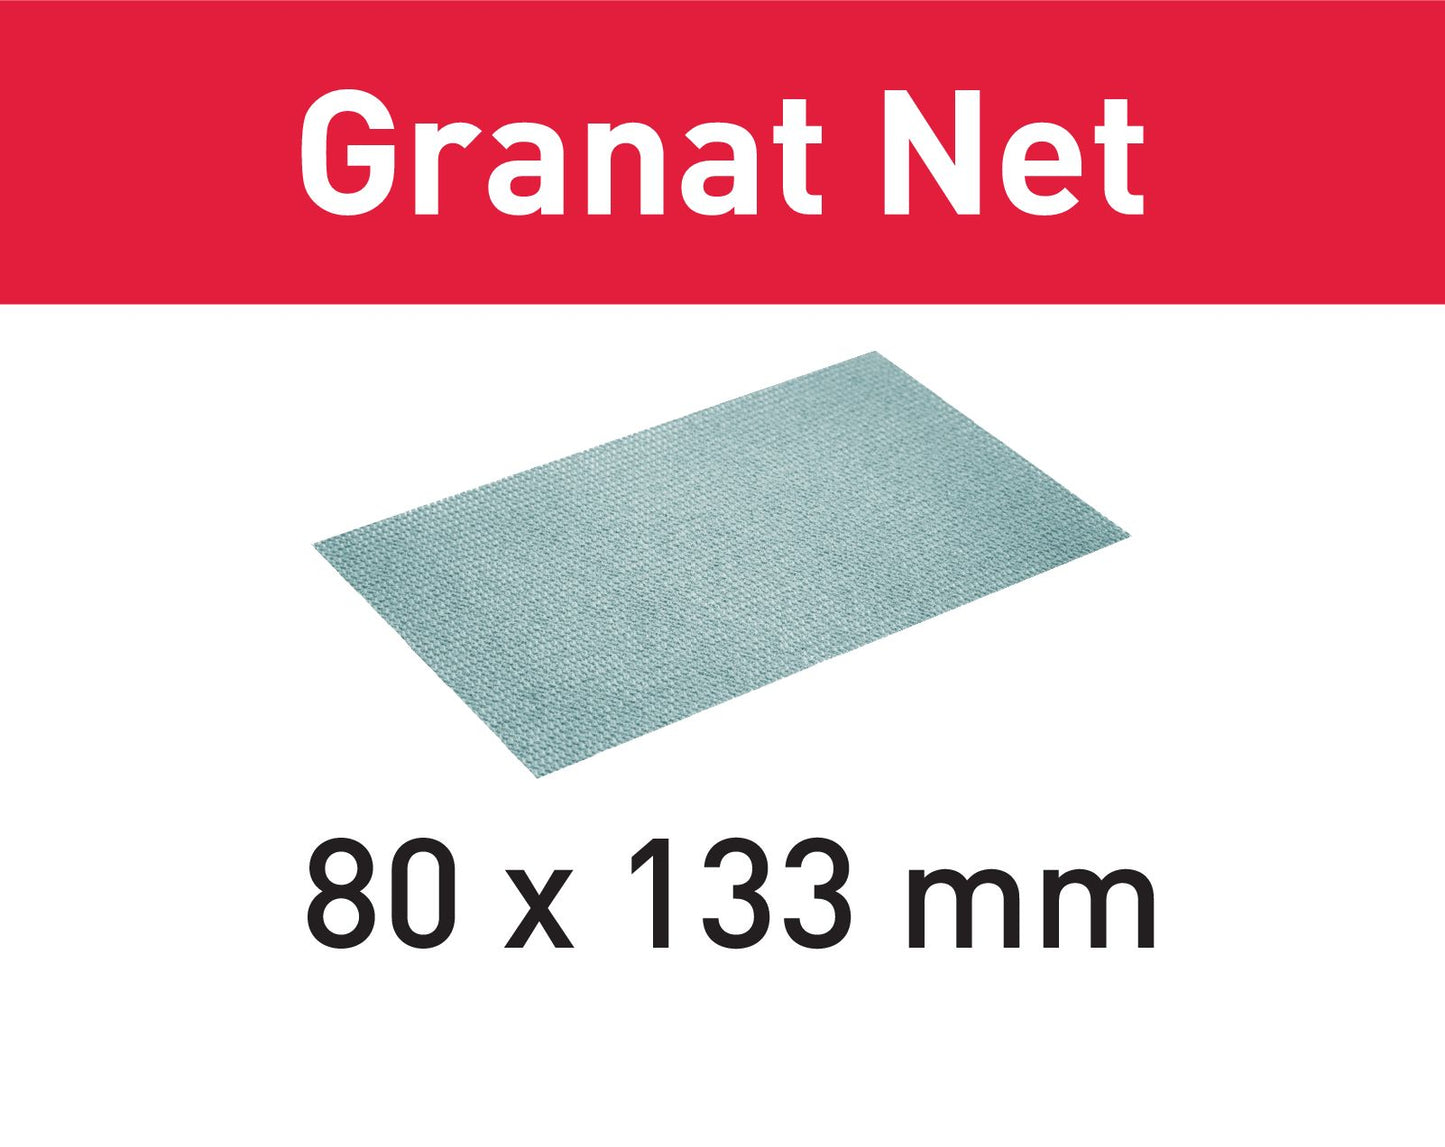 Festool STF 80x133 P320 GR NET/50 Netzschleifmittel Granat Net ( 203292 ) für RTS 400, RTSC 400, RS 400, RS 4, LS 130, HSK-A 80x130, HSK 80x133